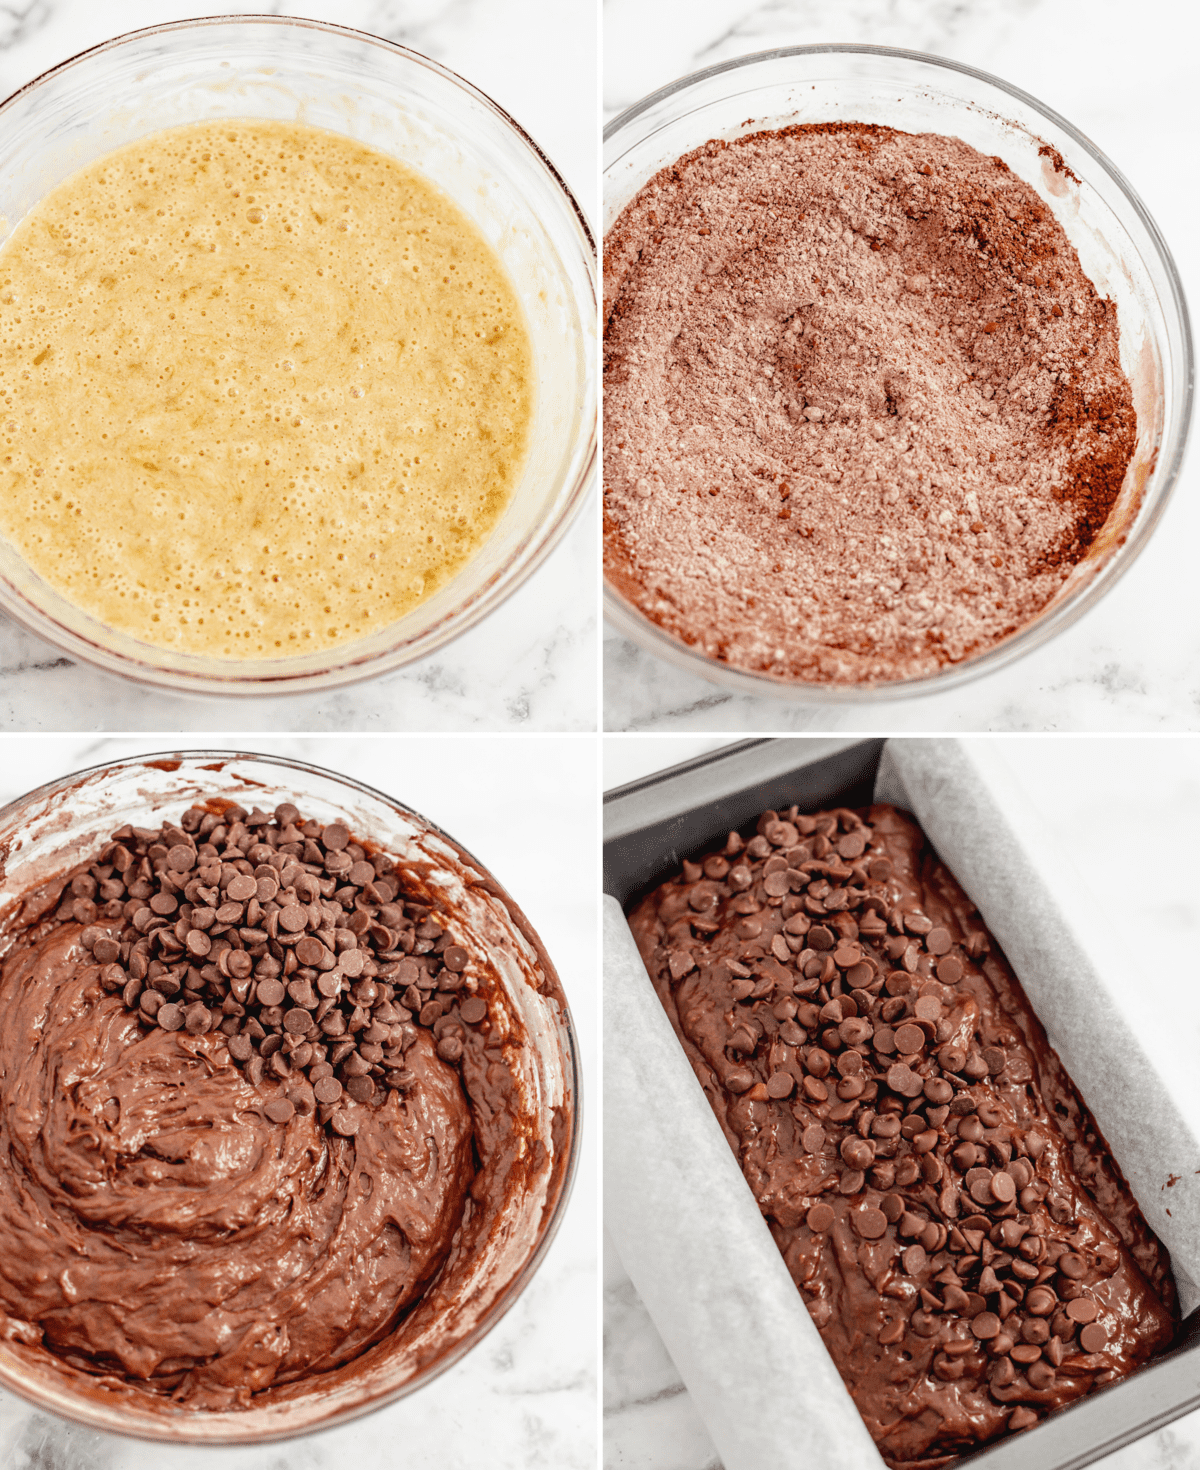 4 photos showing process of making chocolate banana bread